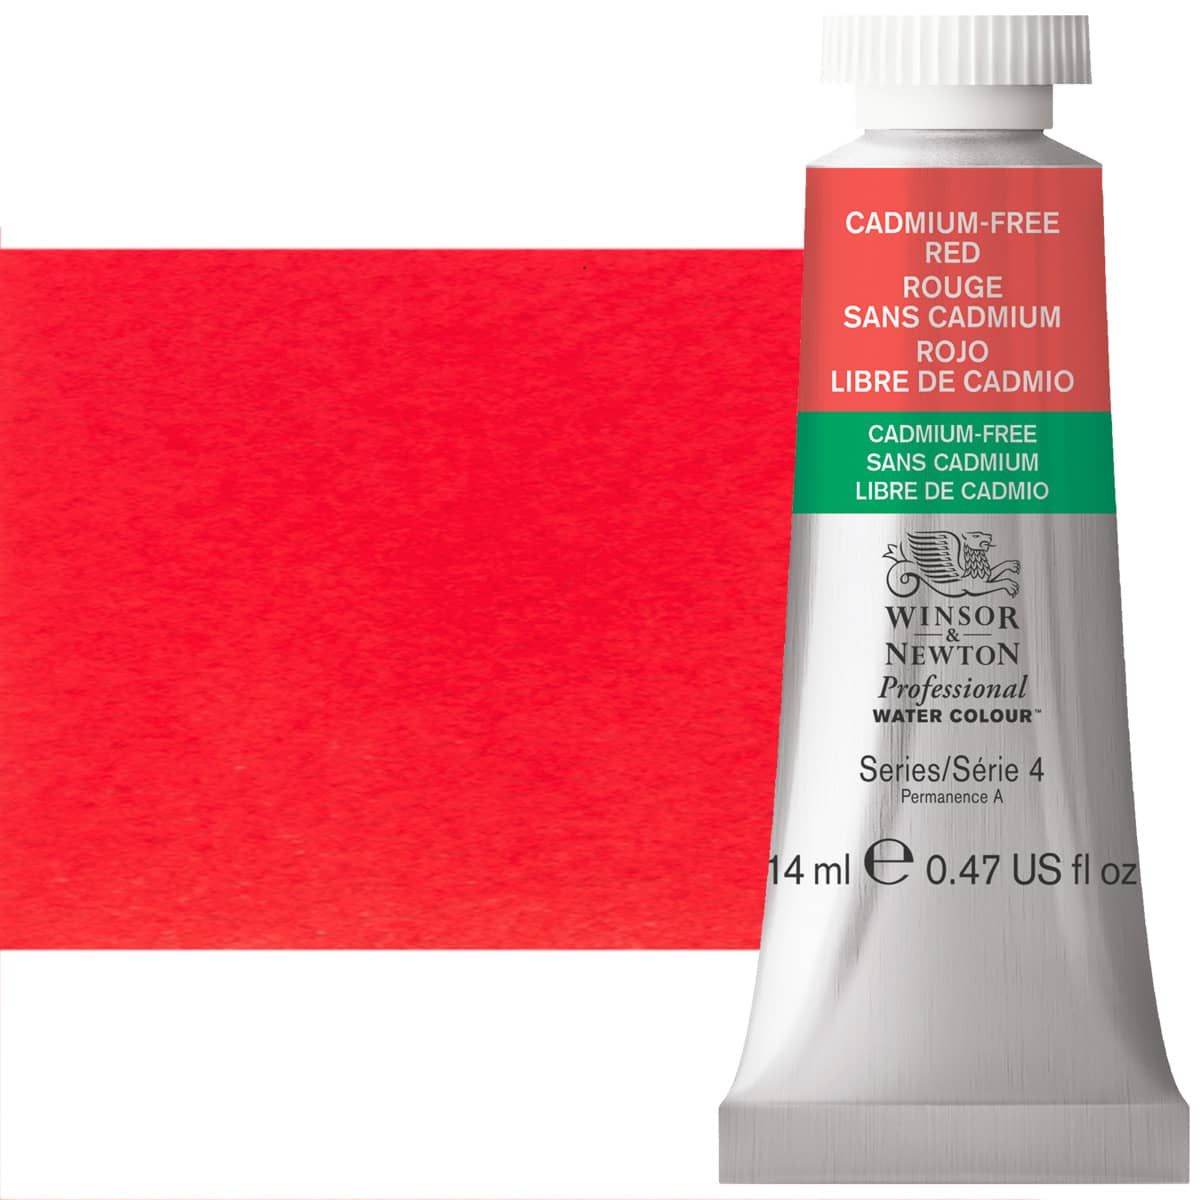 Winsor & Newton Professional Watercolor - Cadmium-Free Red, 14ml Tube